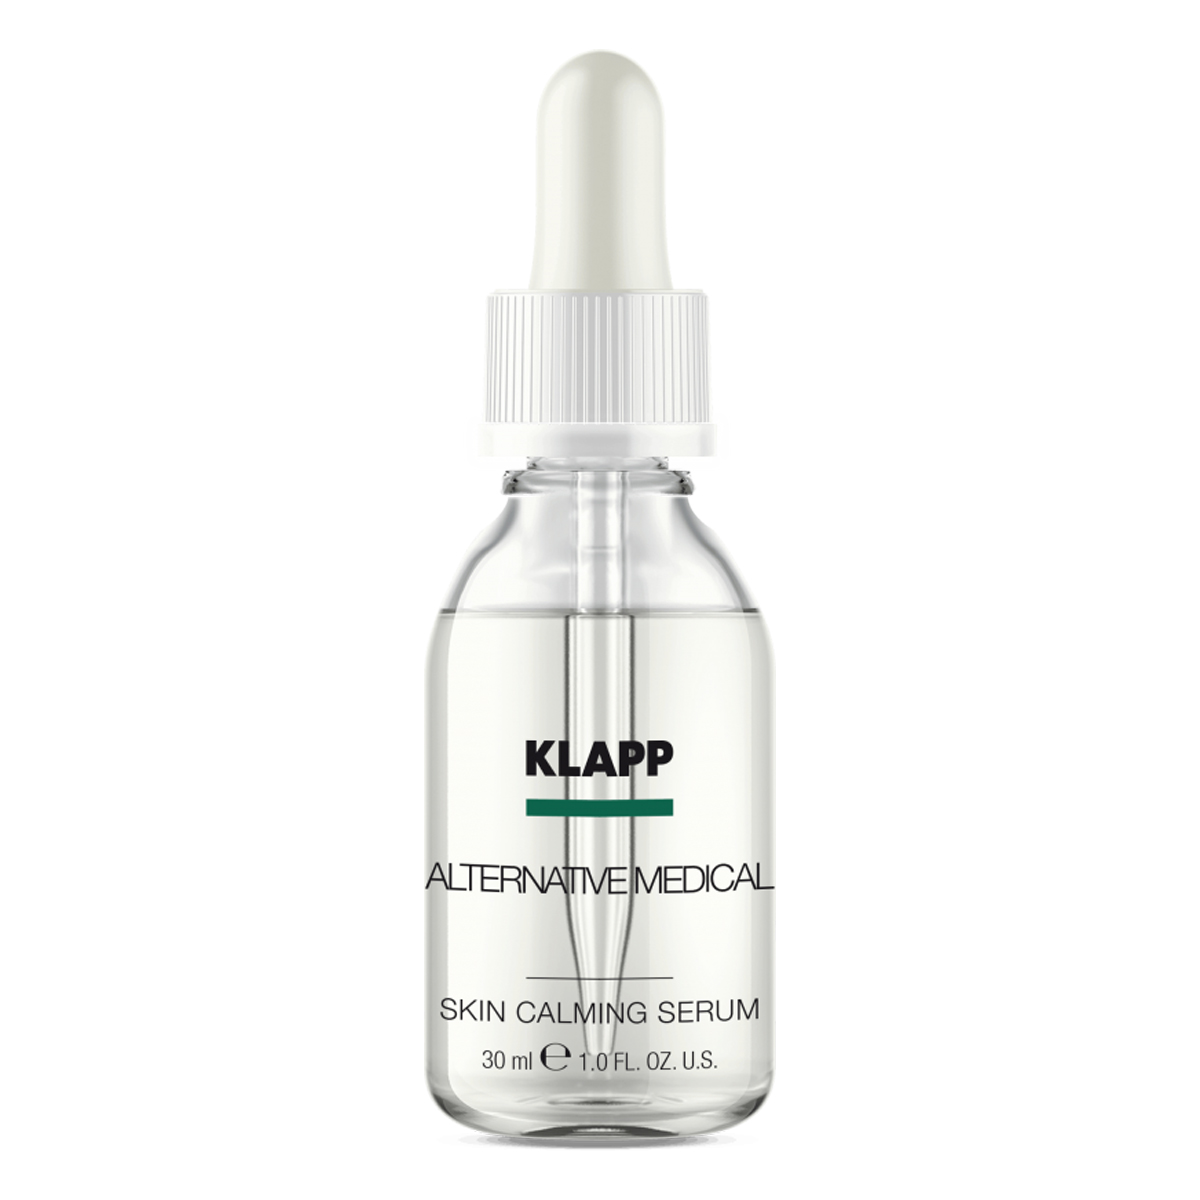 KLAPP Alternative Medical Skin Calming Serum 30 ml